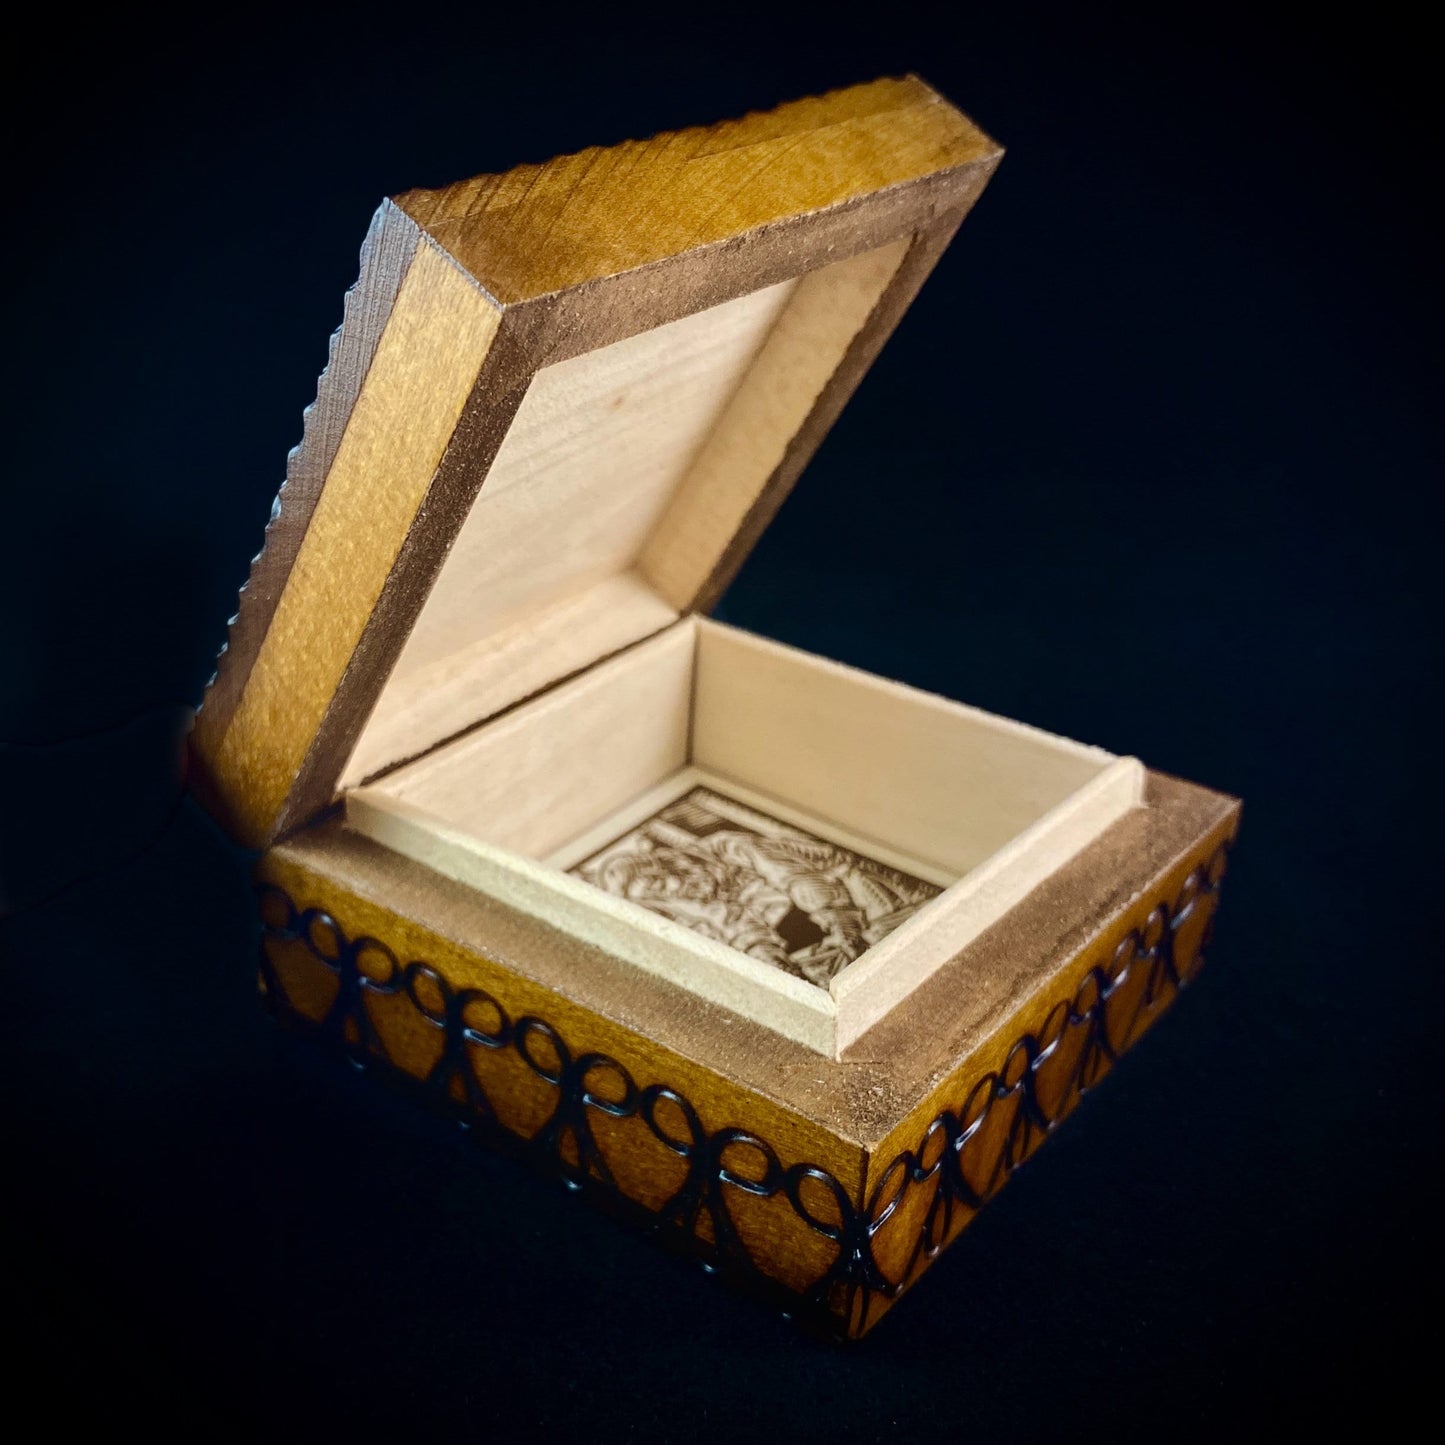 Hearts and Circles Medallion Patterned Jewelry Box, Handmade Hinged Wooden Treasure Box